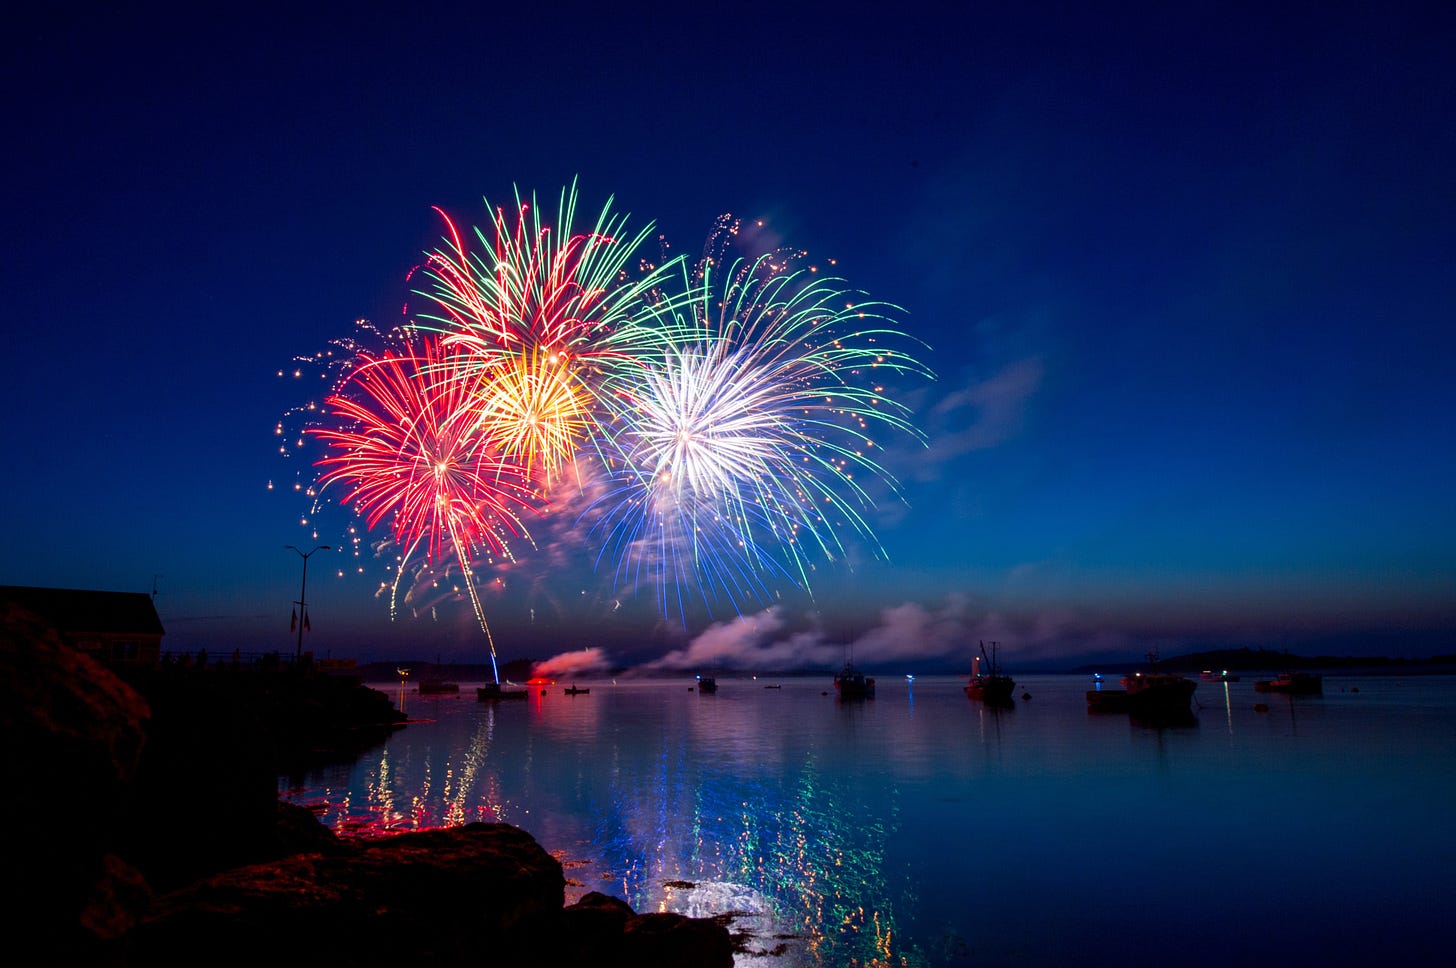 Multi coloured fireworks exploding against a dark blue sky over calm dark blue water.